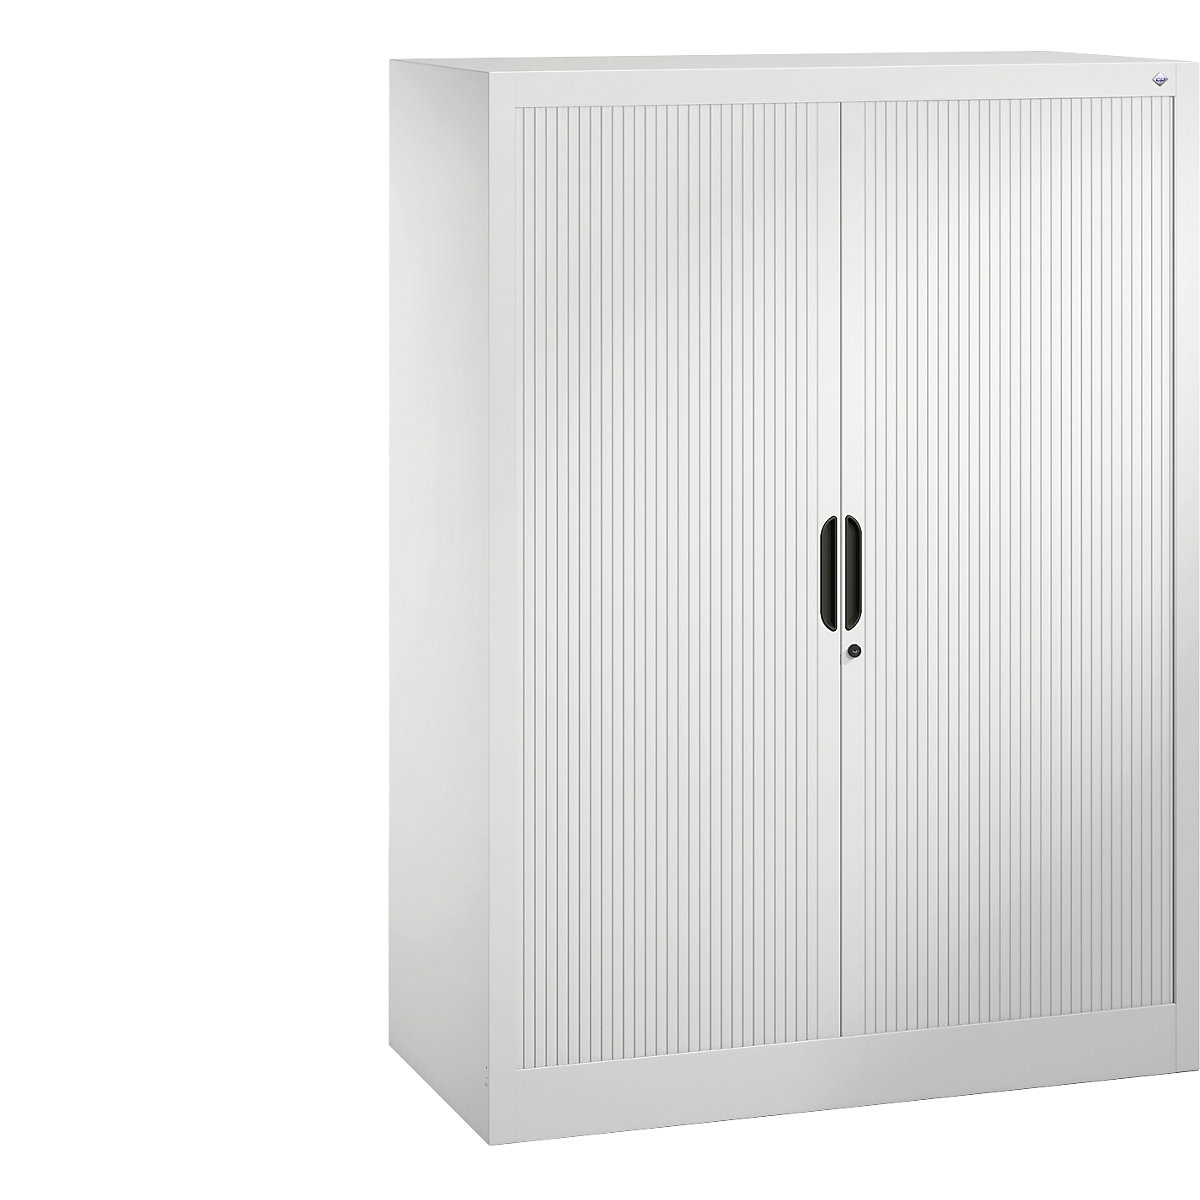 Roller shutter cupboard with horizontal shutter – C+P, HxWxD 1345 x 1000 x 420 mm, 3 shelves, 3.5 file heights, traffic white-6